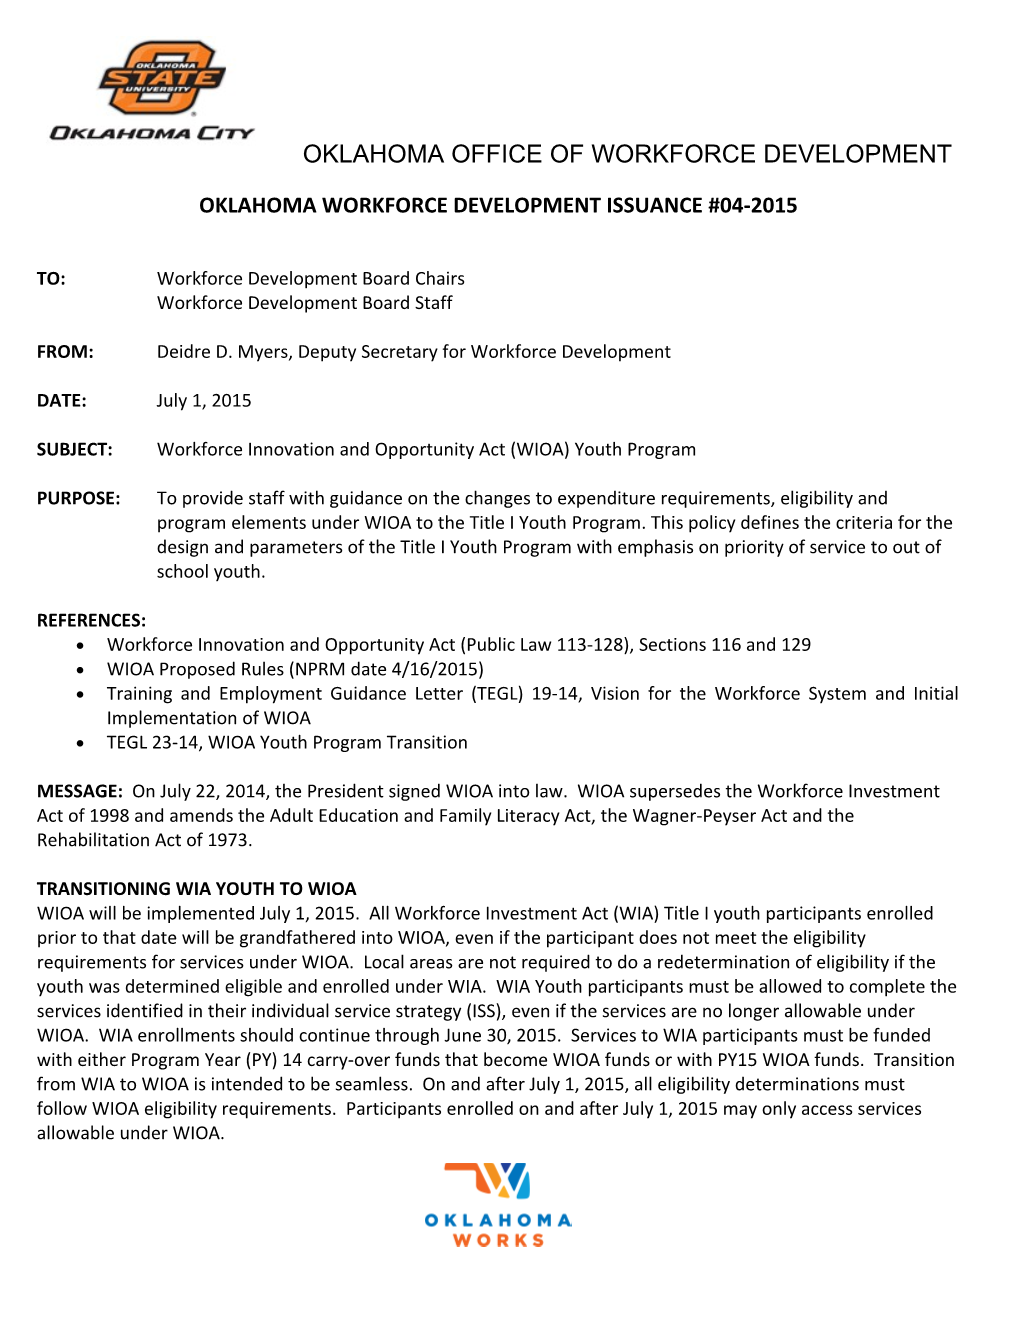 Oklahoma Workforce Development Issuance #04-2015